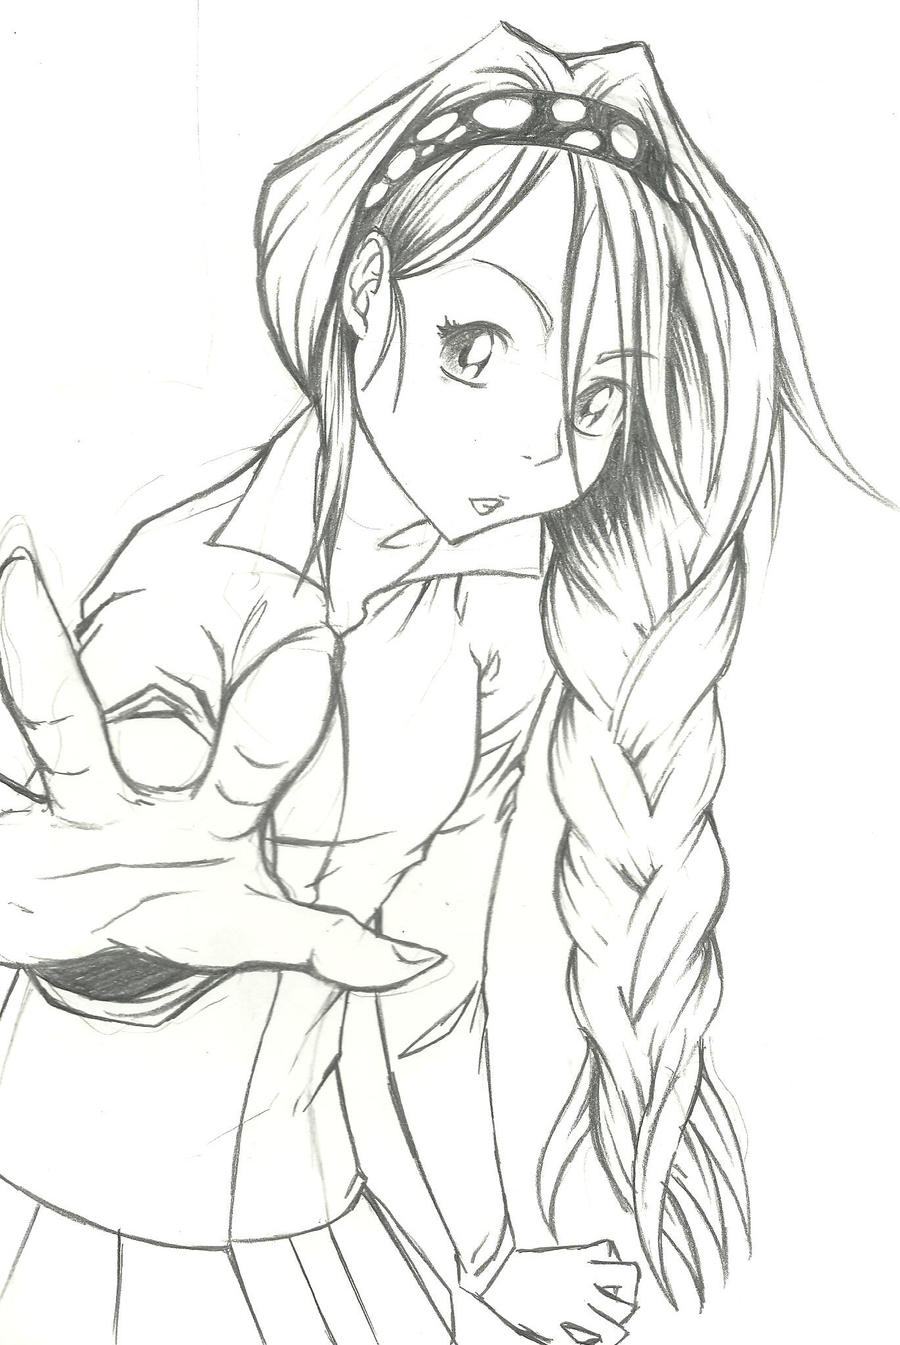 Random anime/manga drawing by GypsyRequiem on DeviantArt